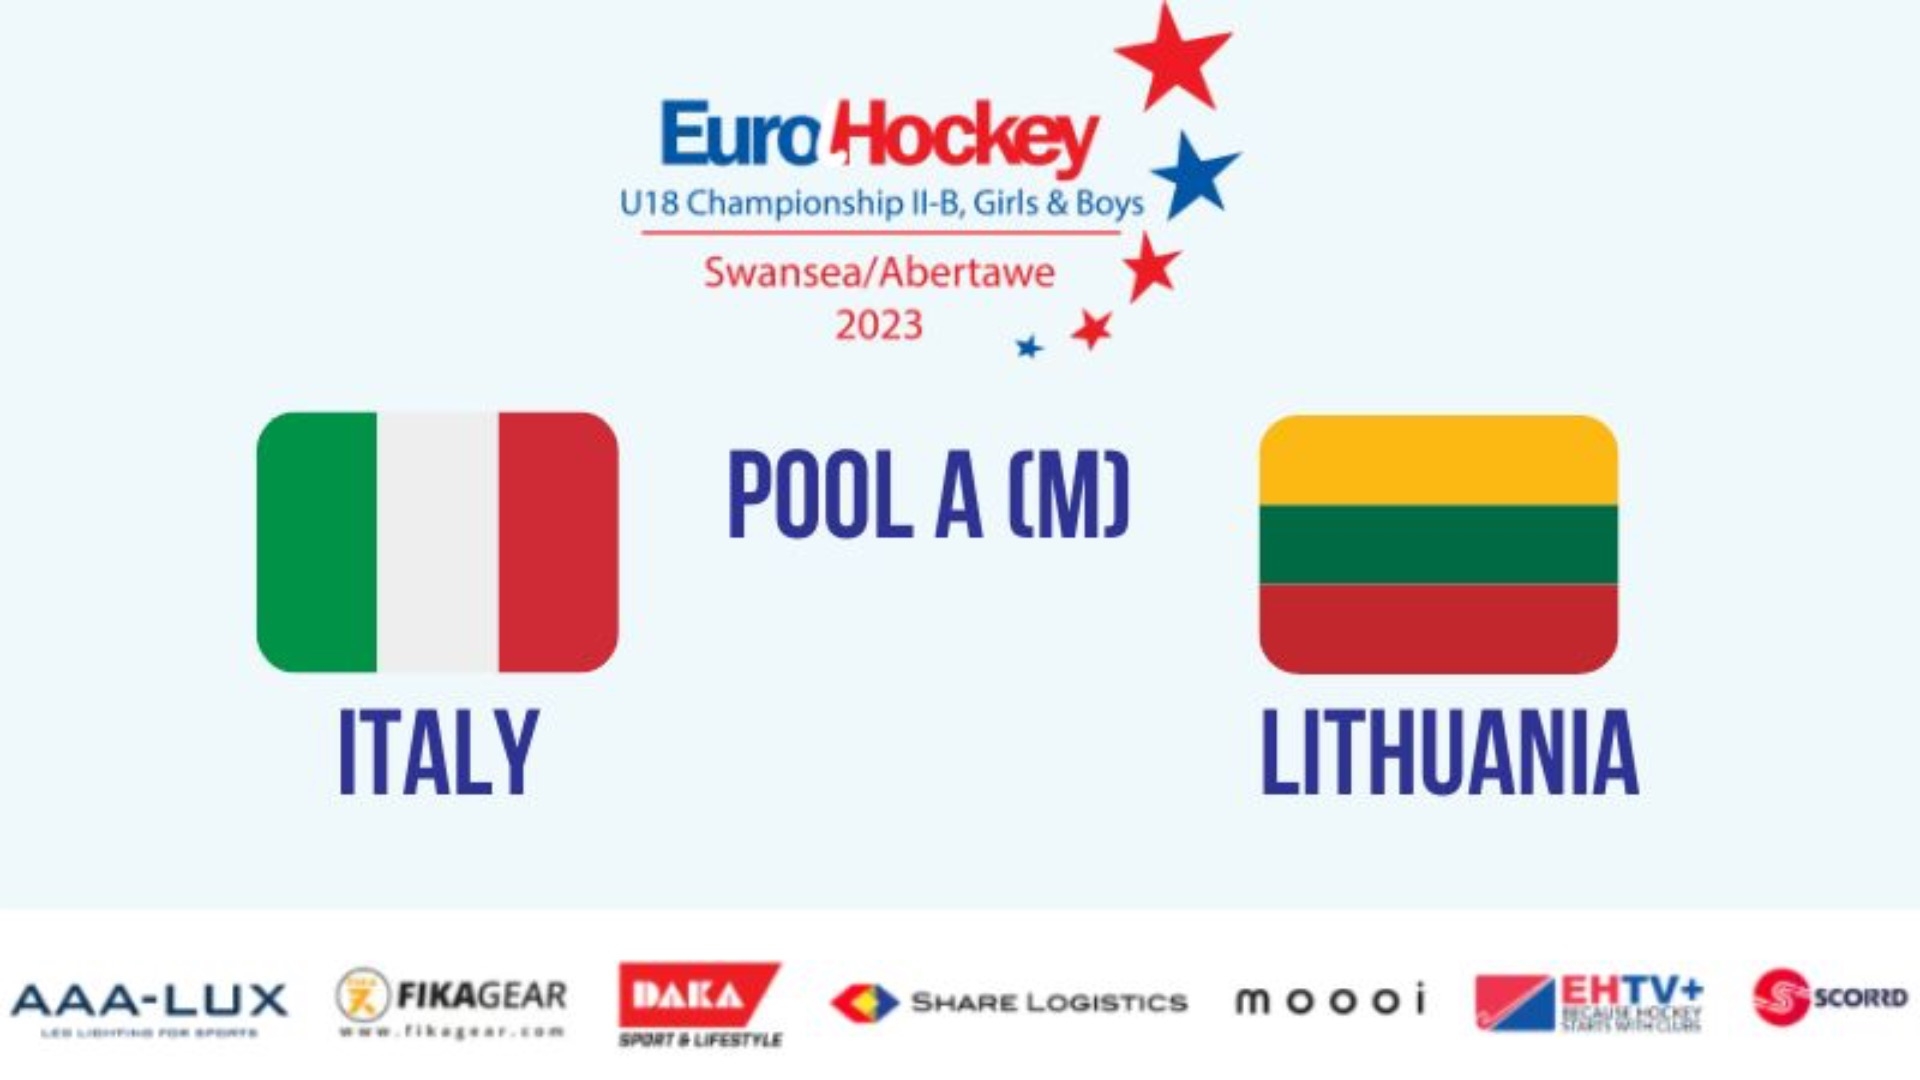 Italy v Lithuania (m)